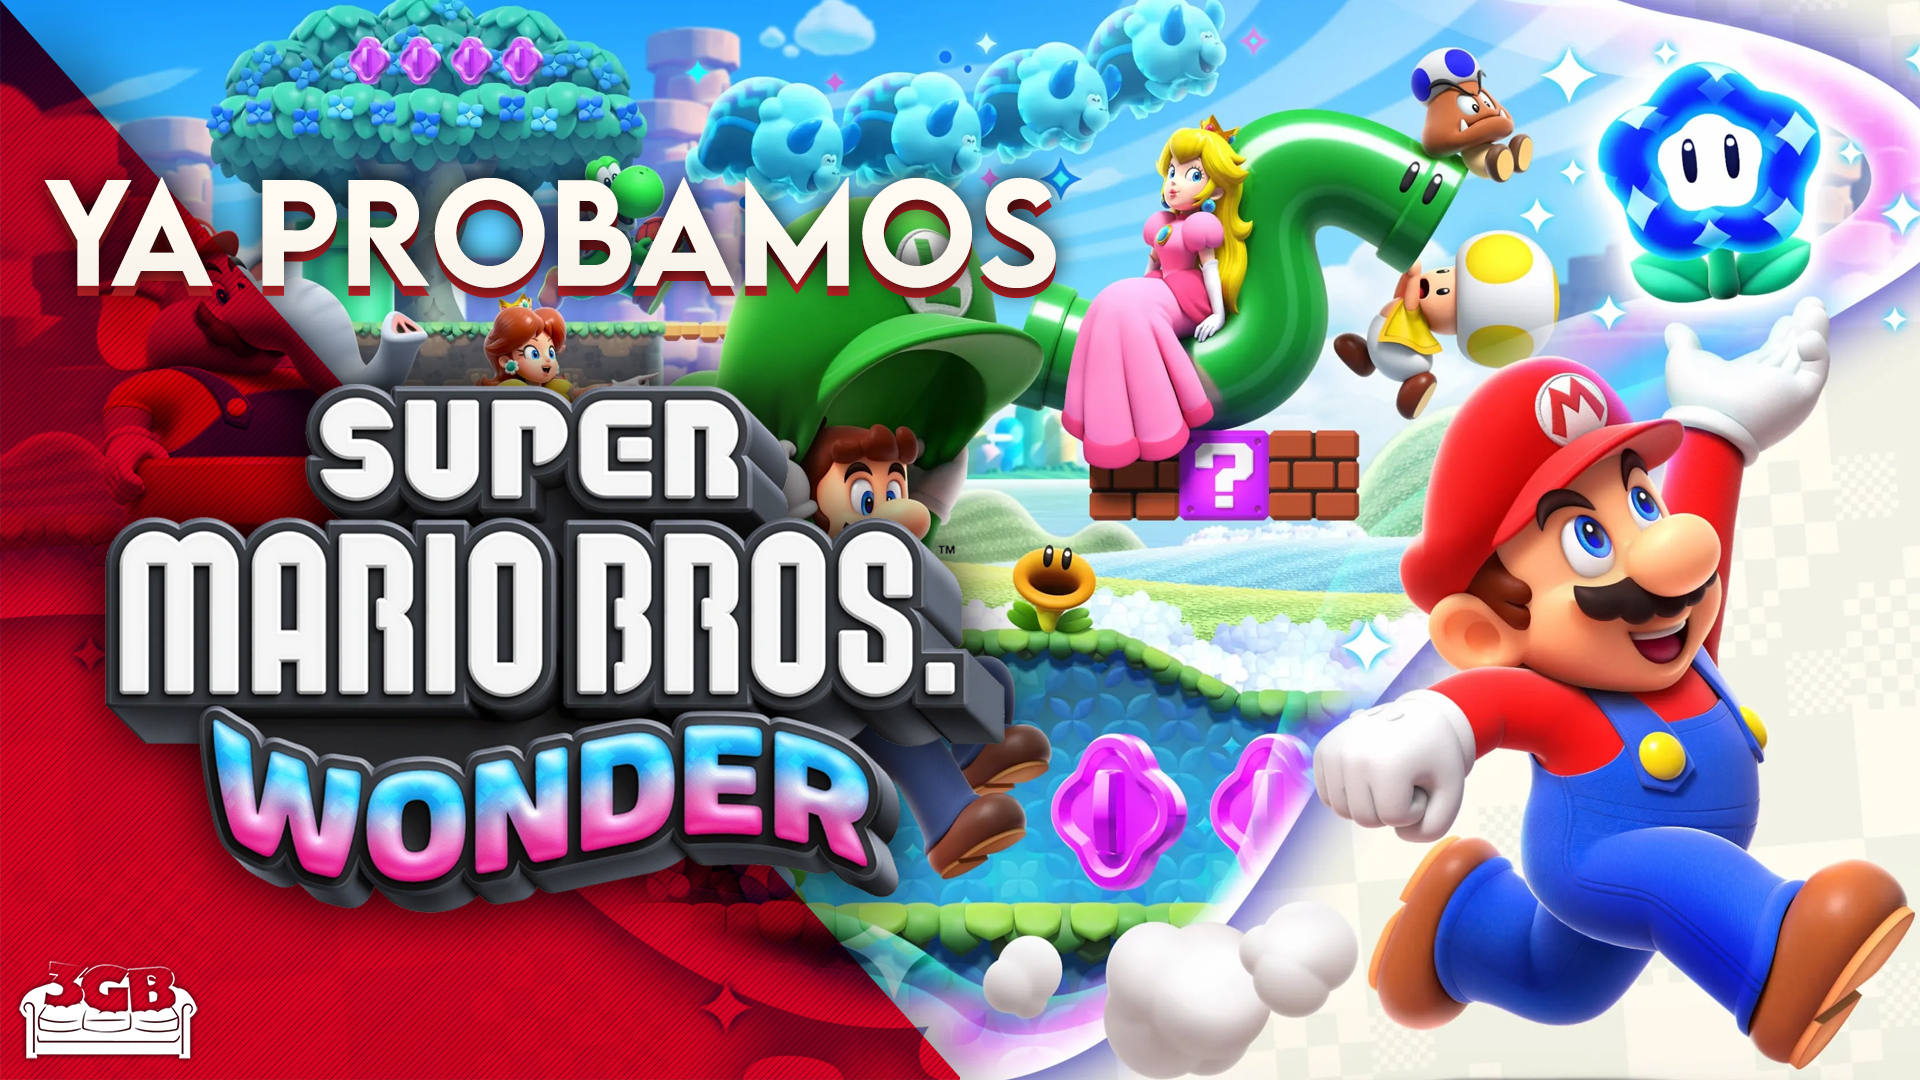 ¡ Ya probamos Super Mario Bros. Wonder !